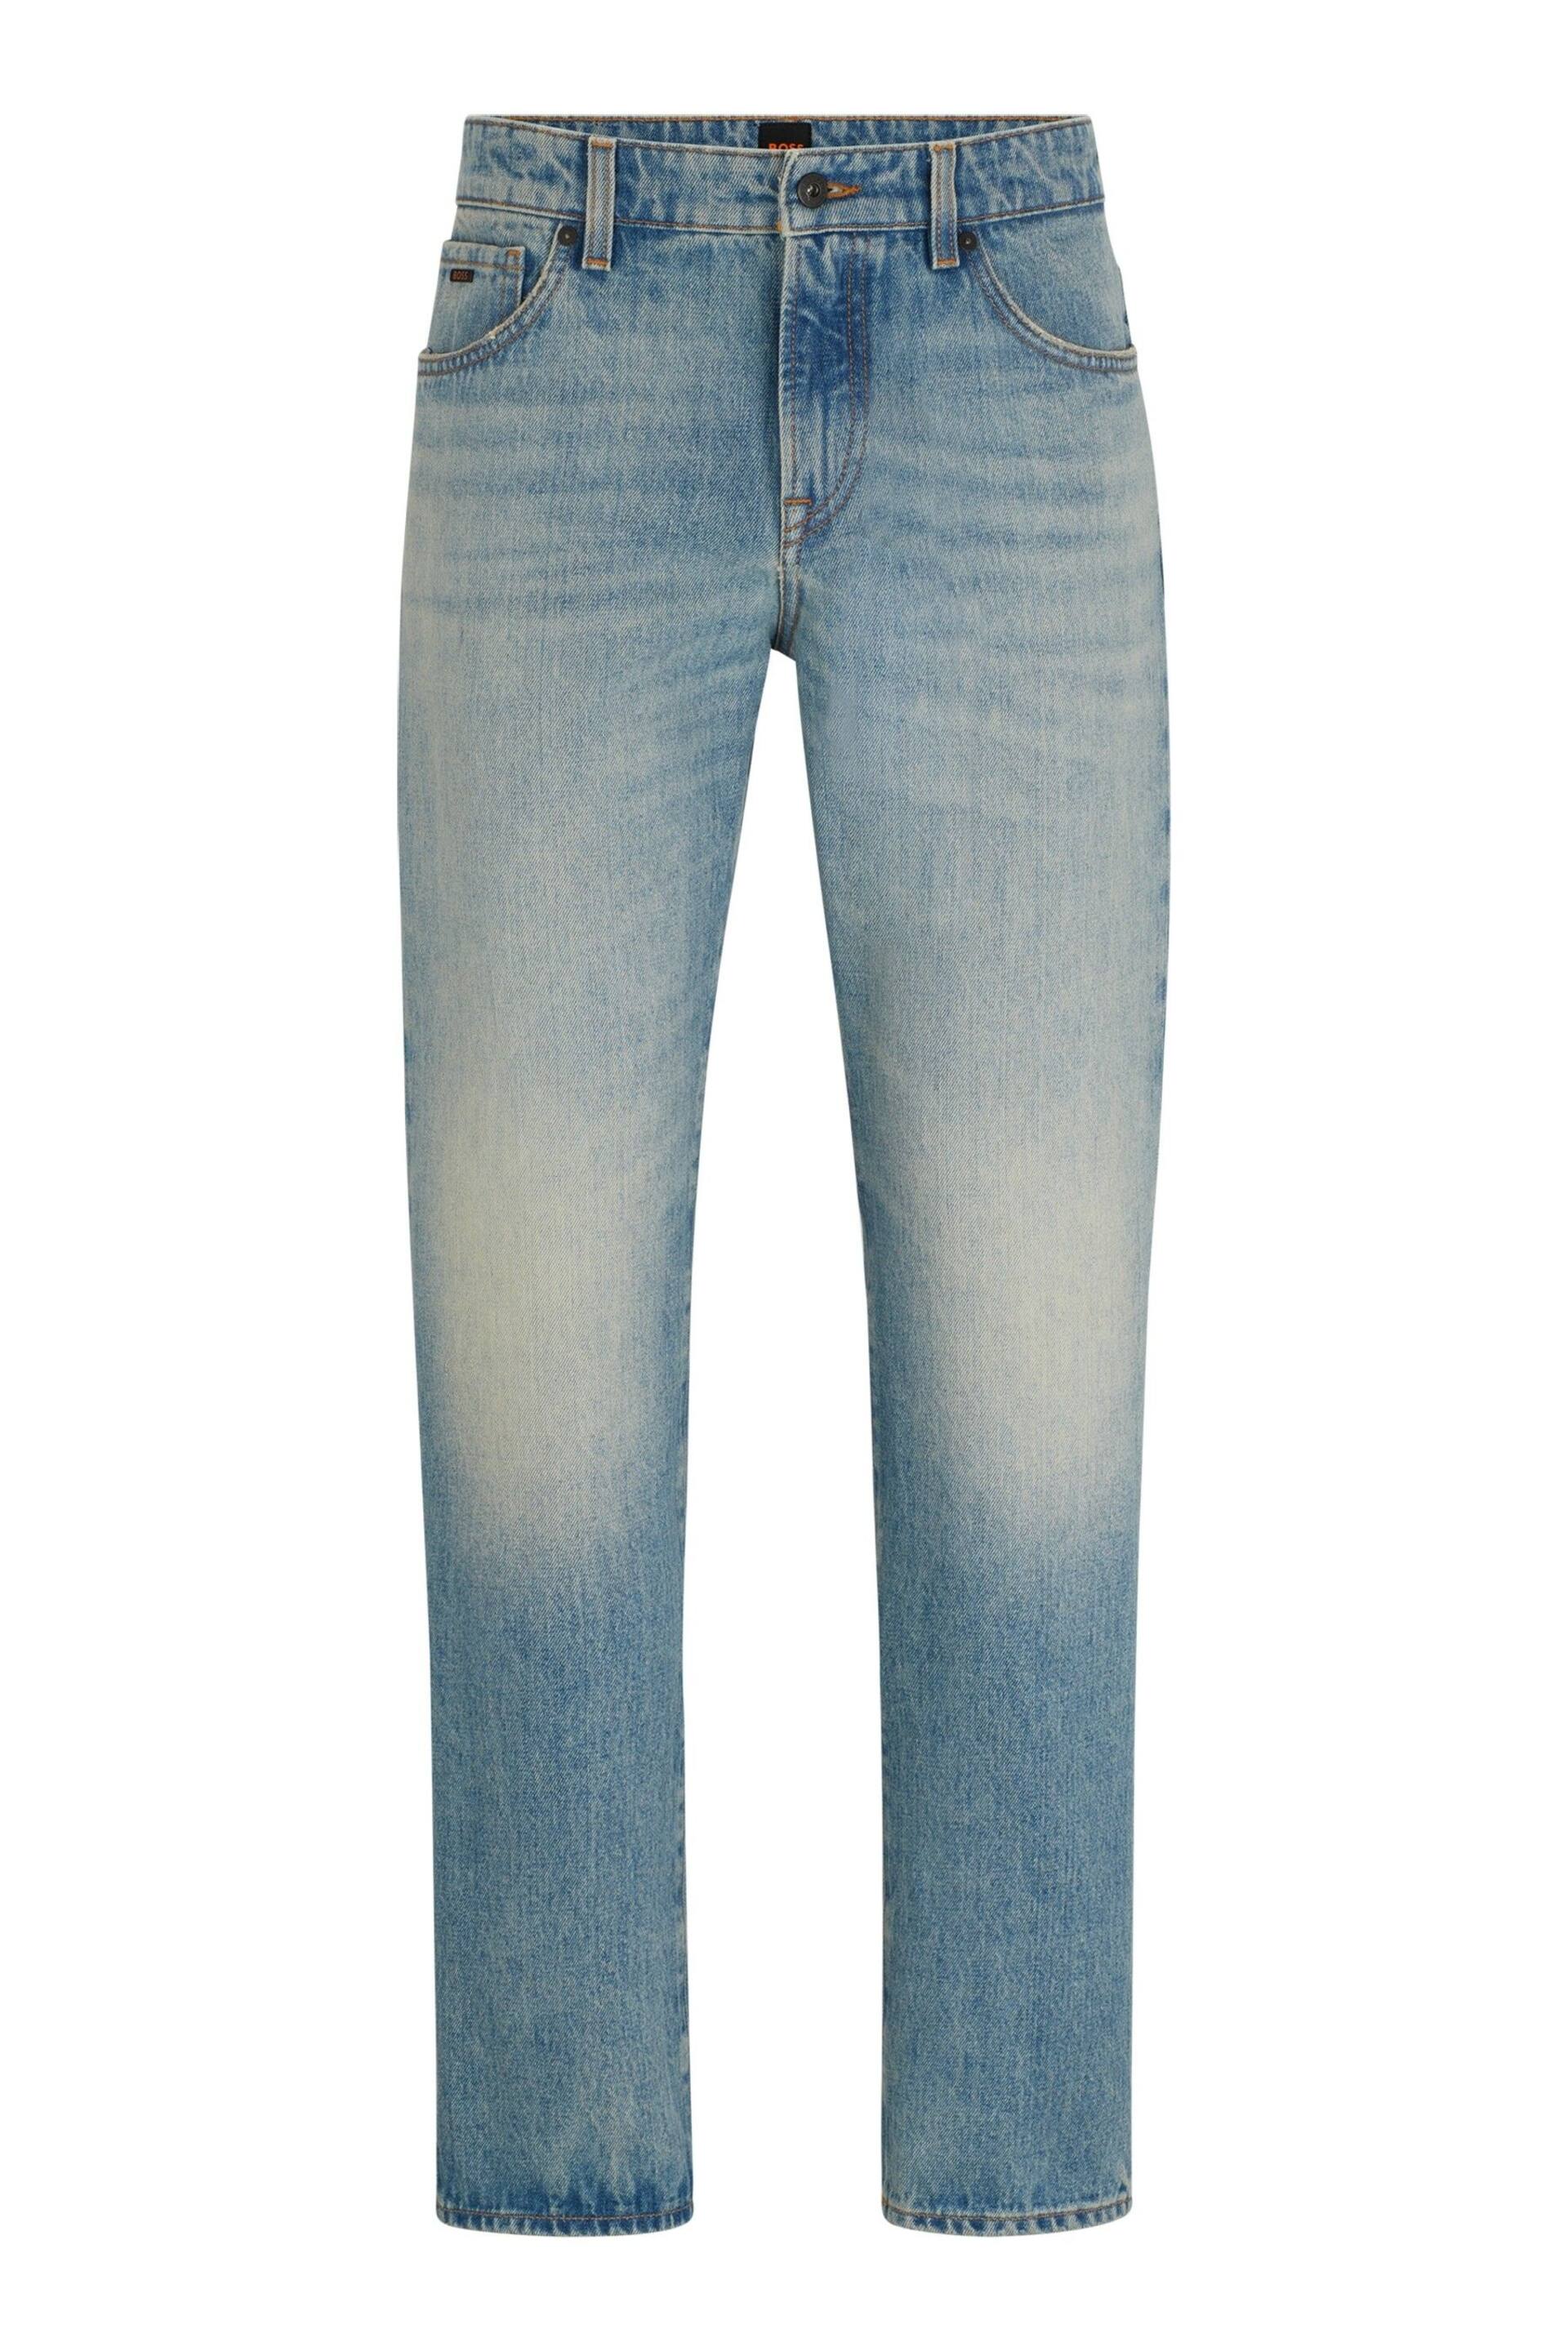 BOSS Light Blue Delaware Slim Fit Stretch Jeans - Image 5 of 5